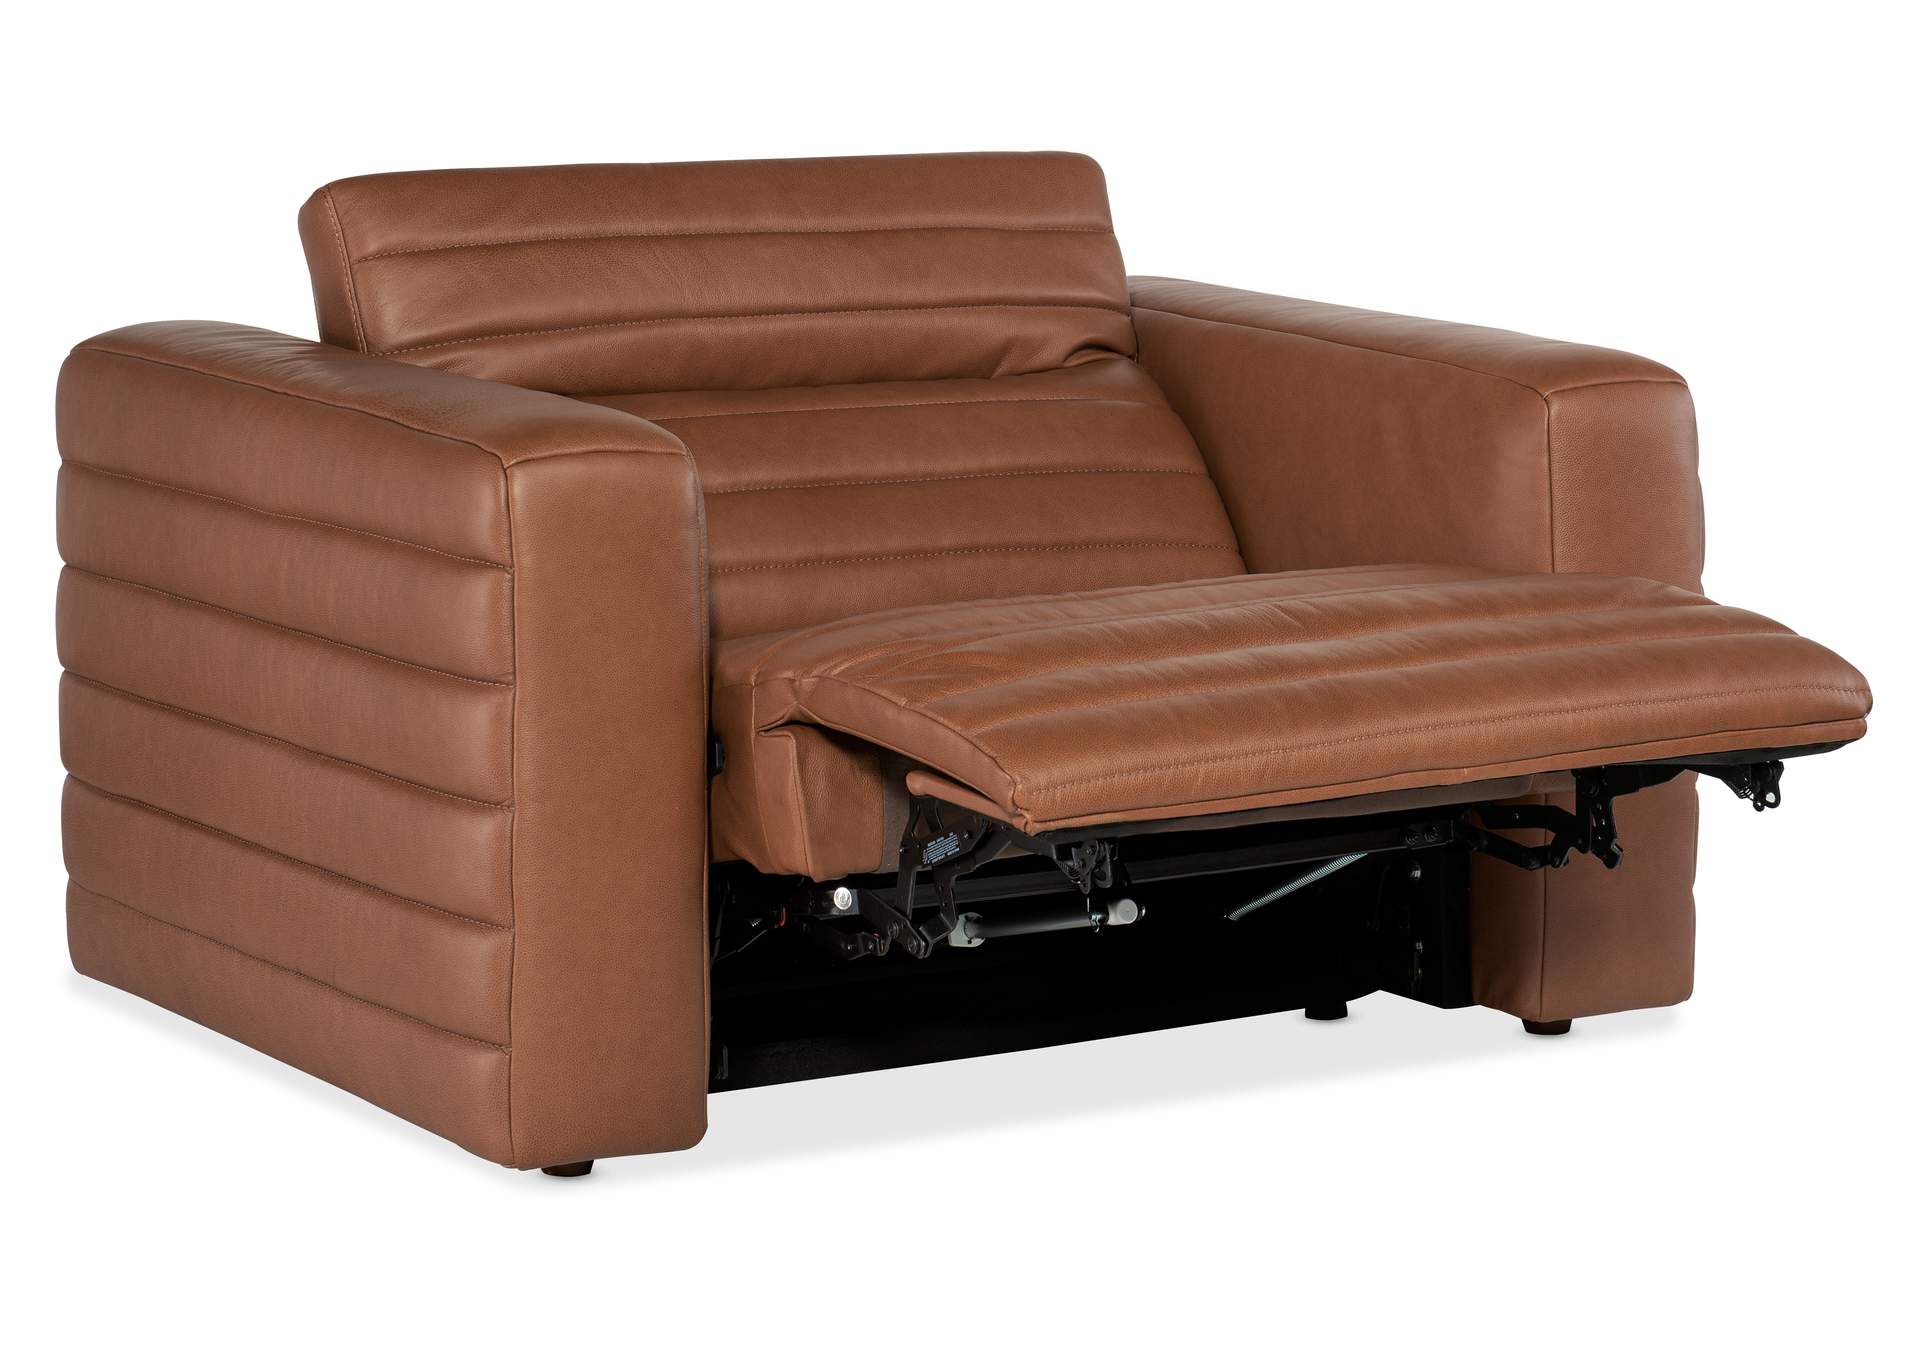 Chatelain Power Recliner with Power Headrest,Hooker Furniture